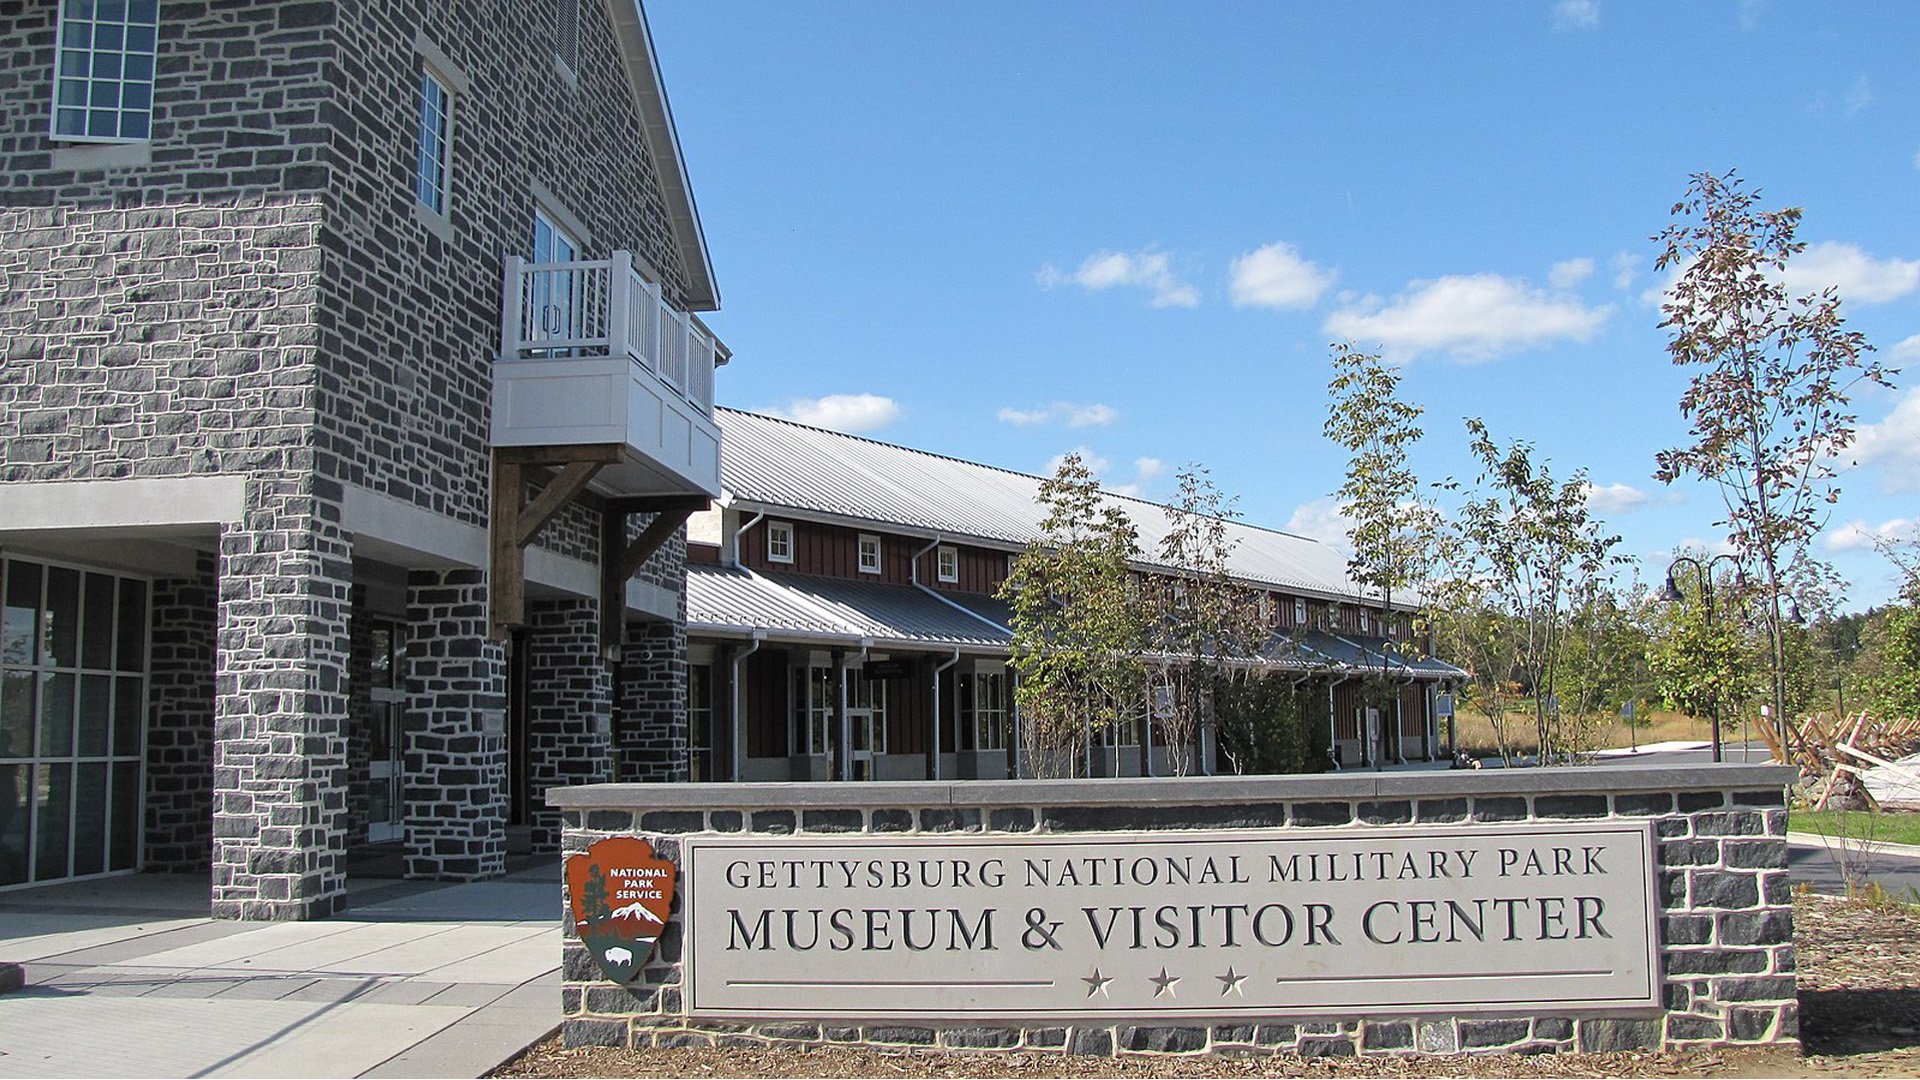 Gettysburg-National-Military-Park-Museum-Visitor-Center-1.jpg